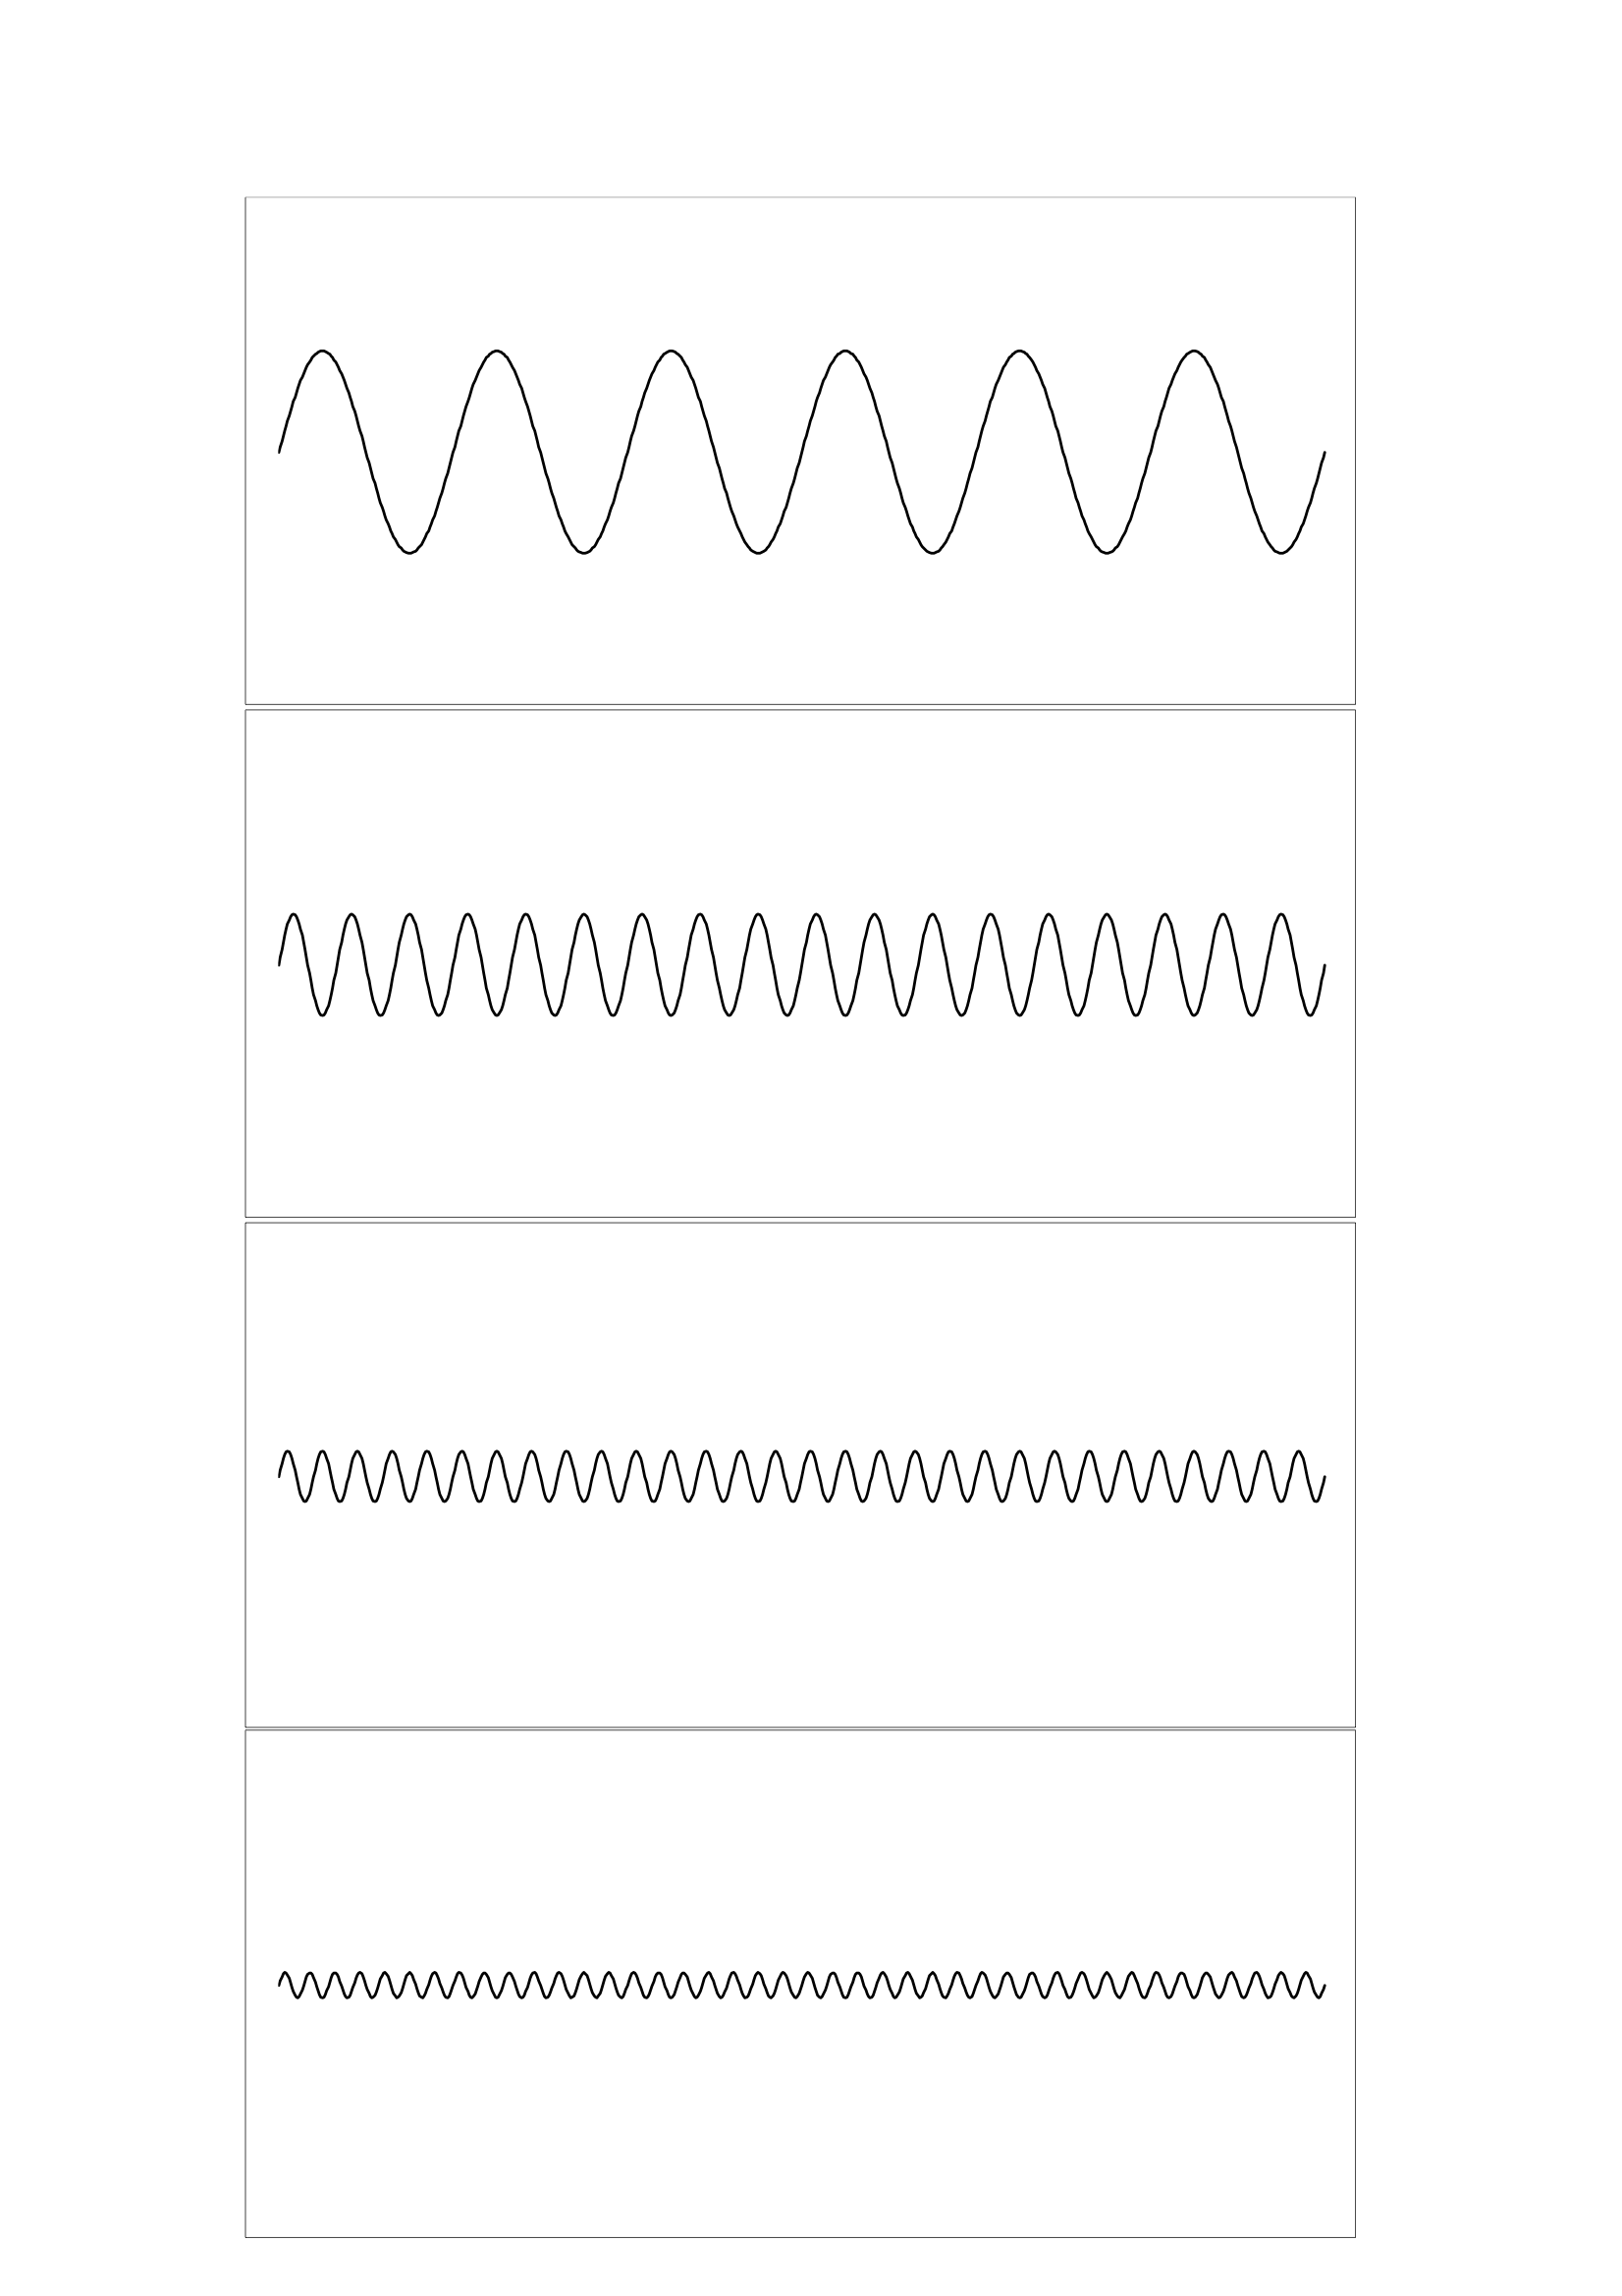 Four sine waves